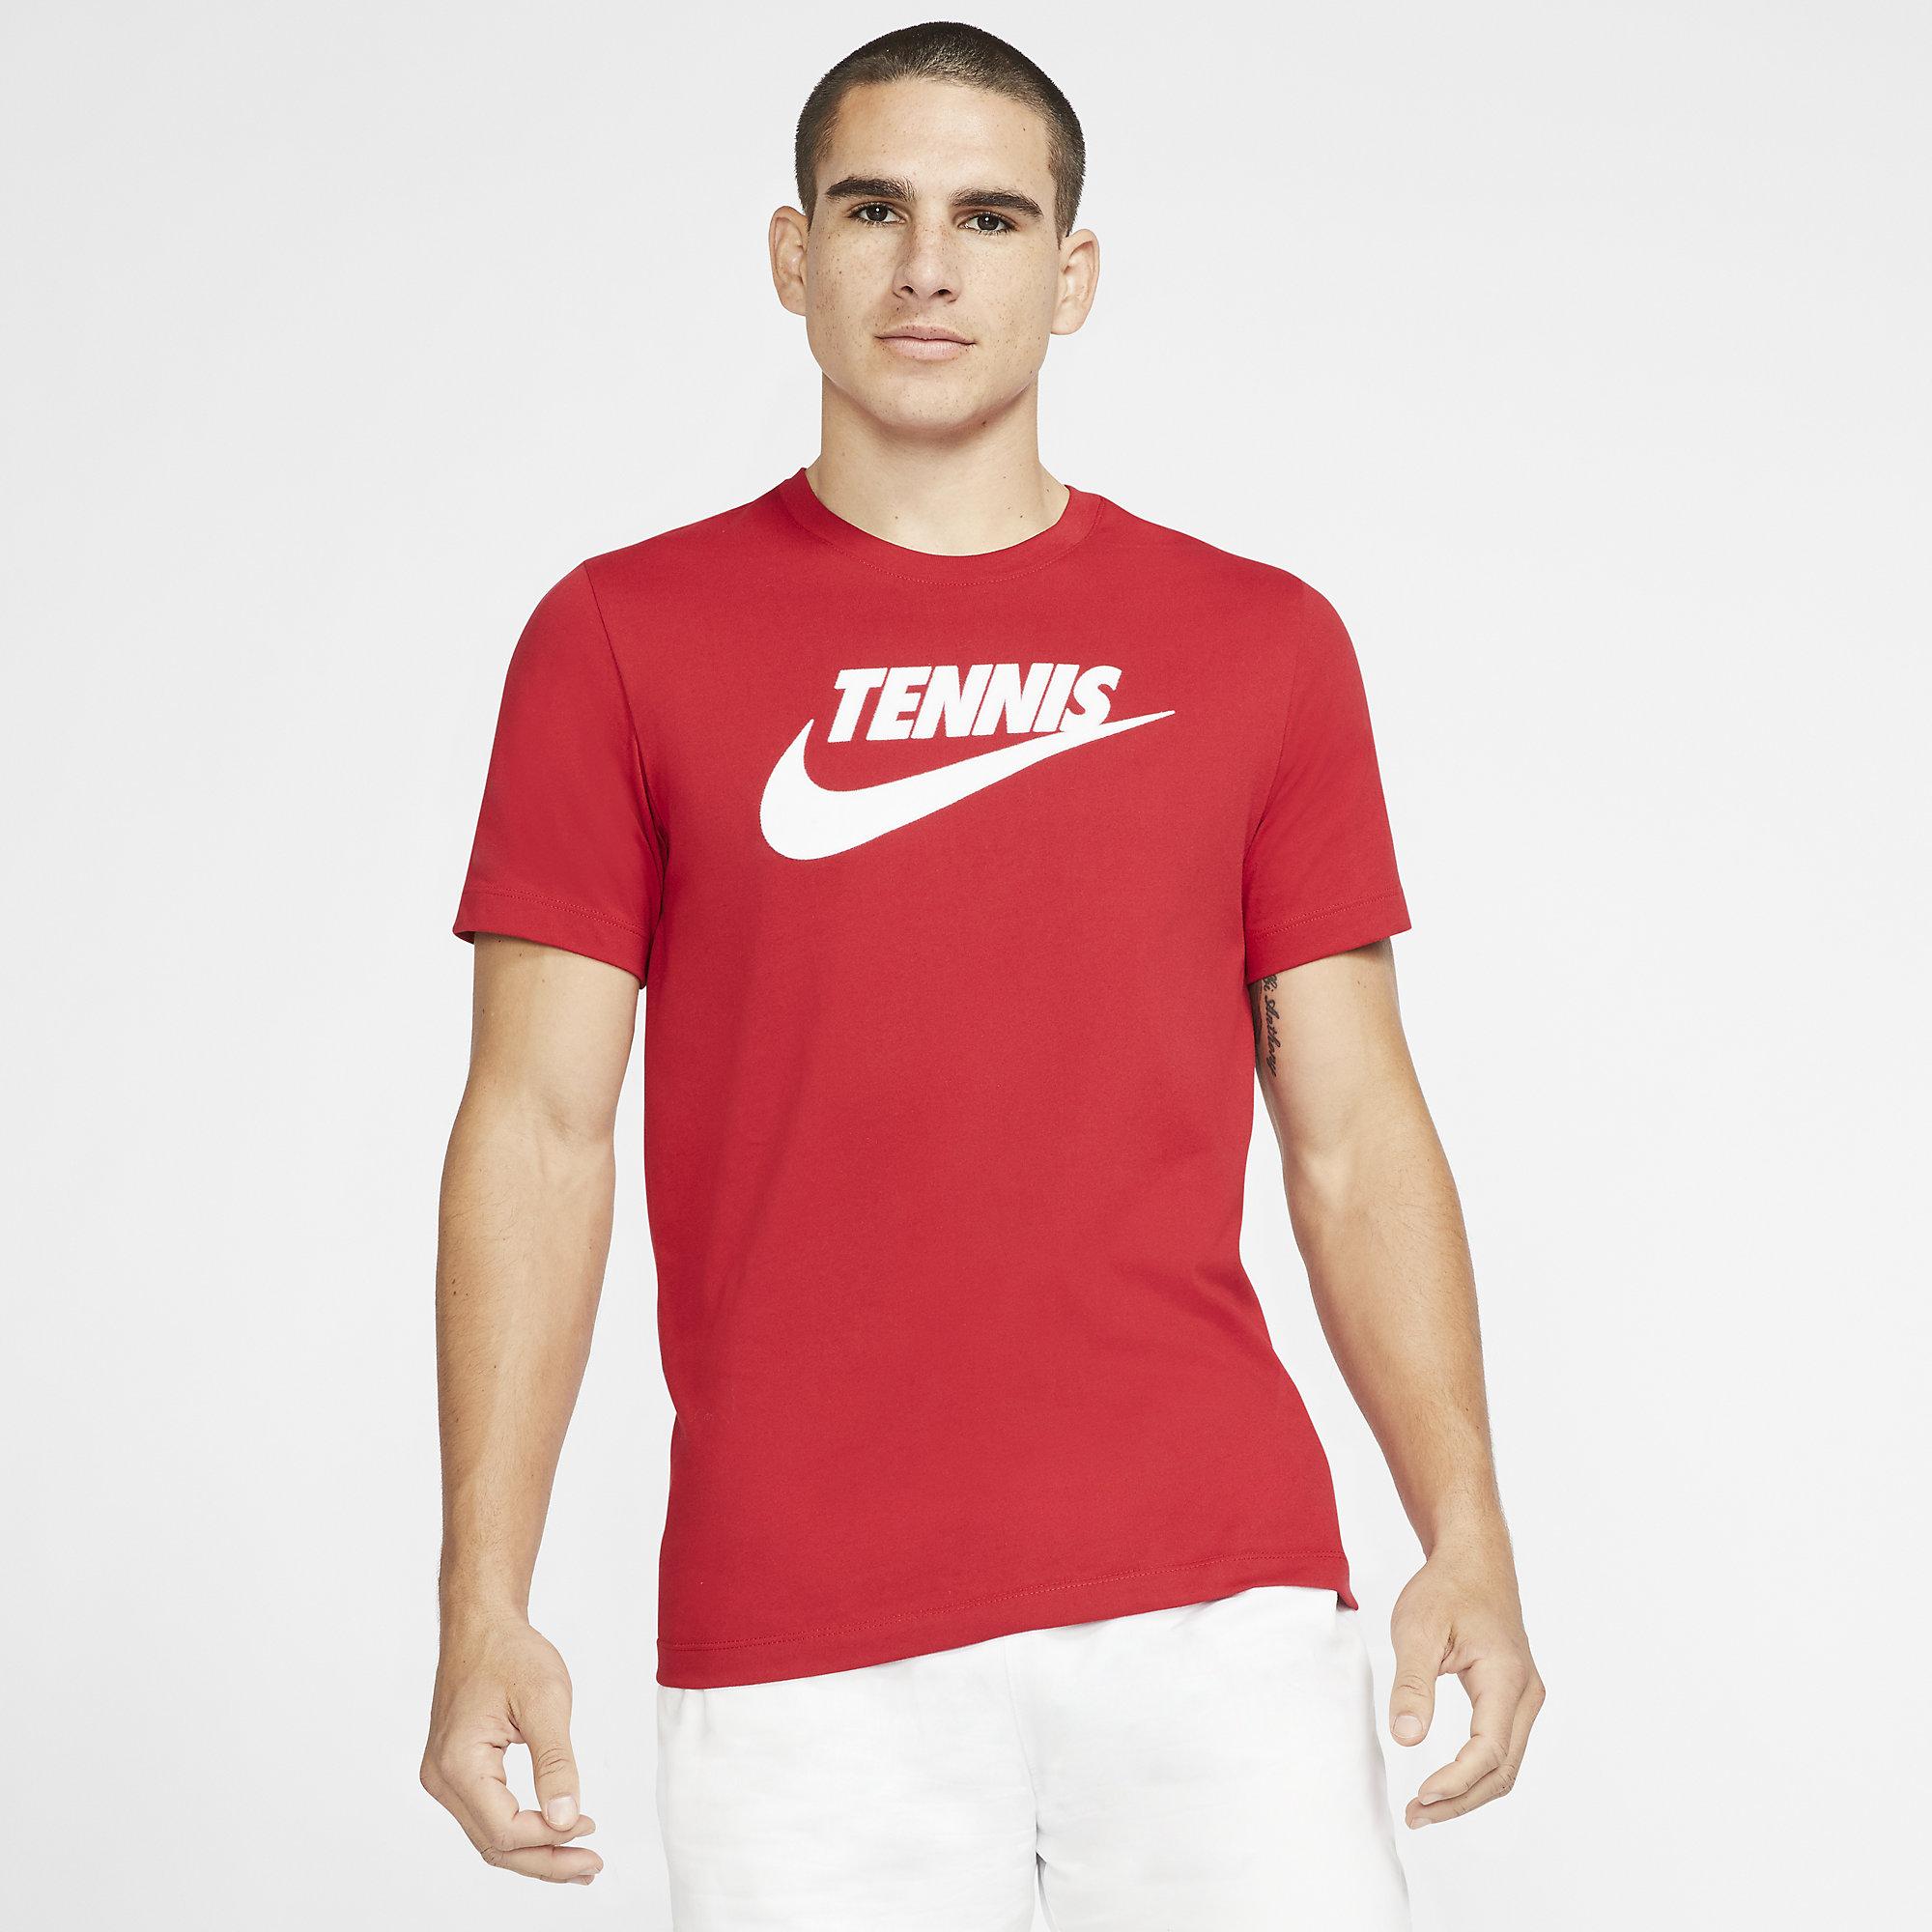 Nike Mens Dri-FIT Tennis T-Shirt - Gym Red - Tennisnuts.com